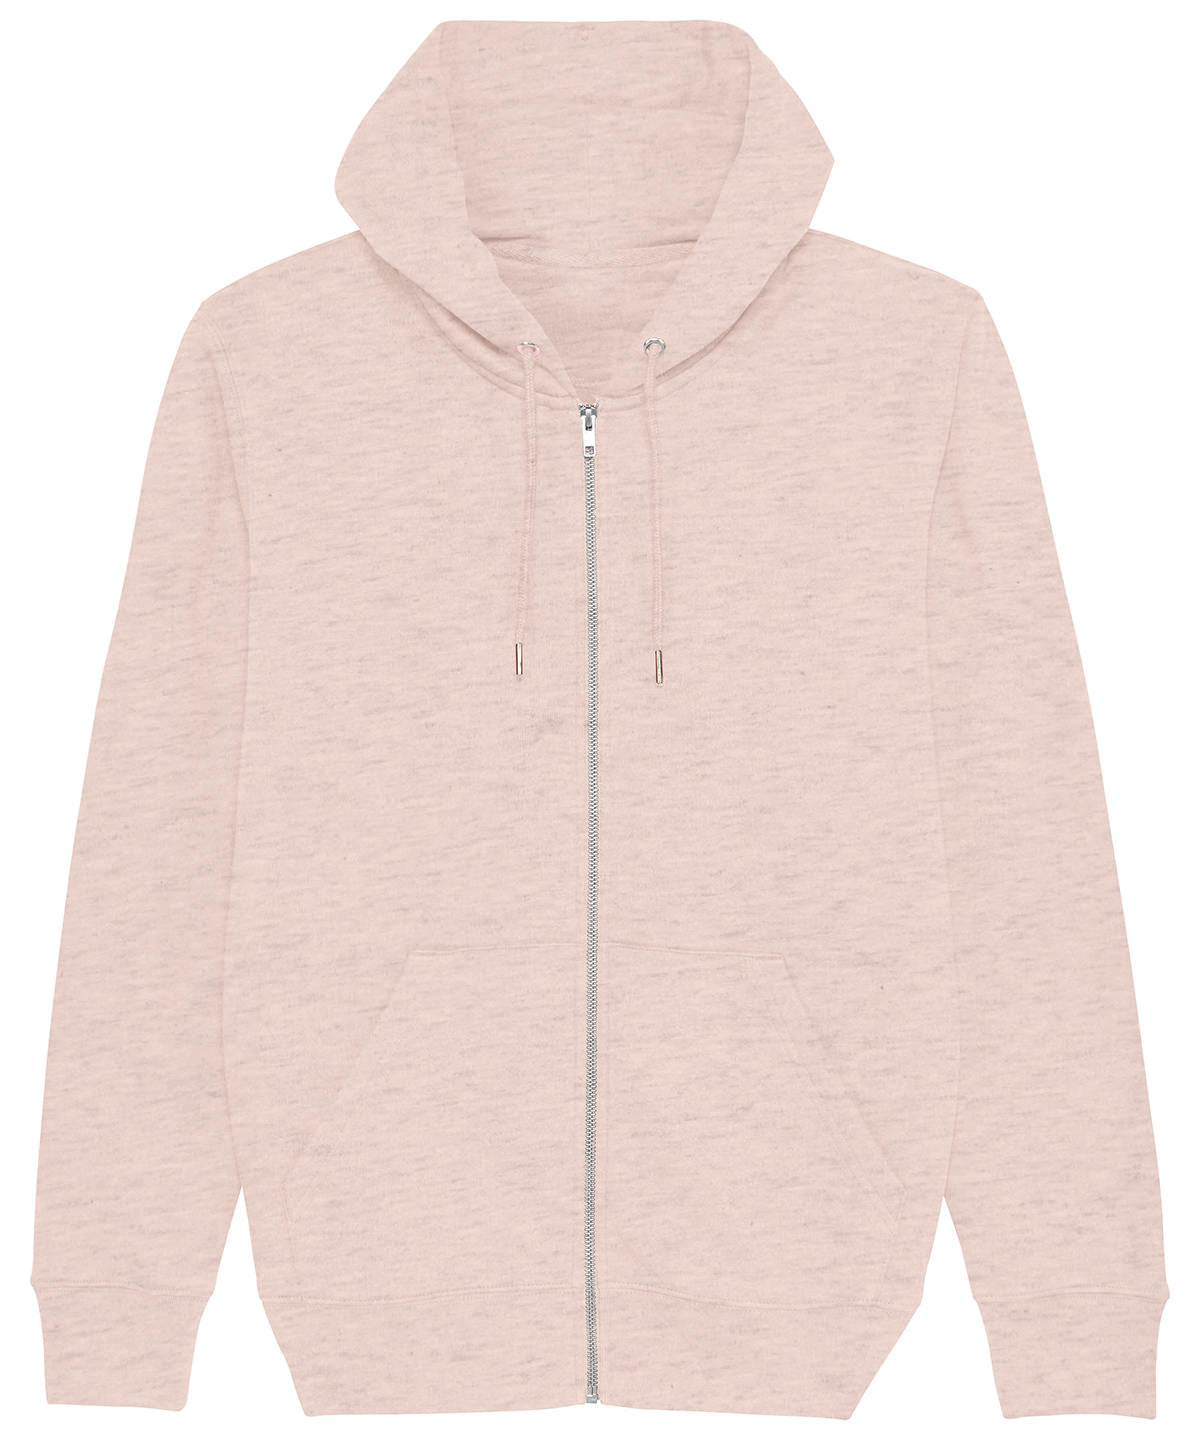 Cultivator, unisex iconic zip-thru hoodie sweatshirt